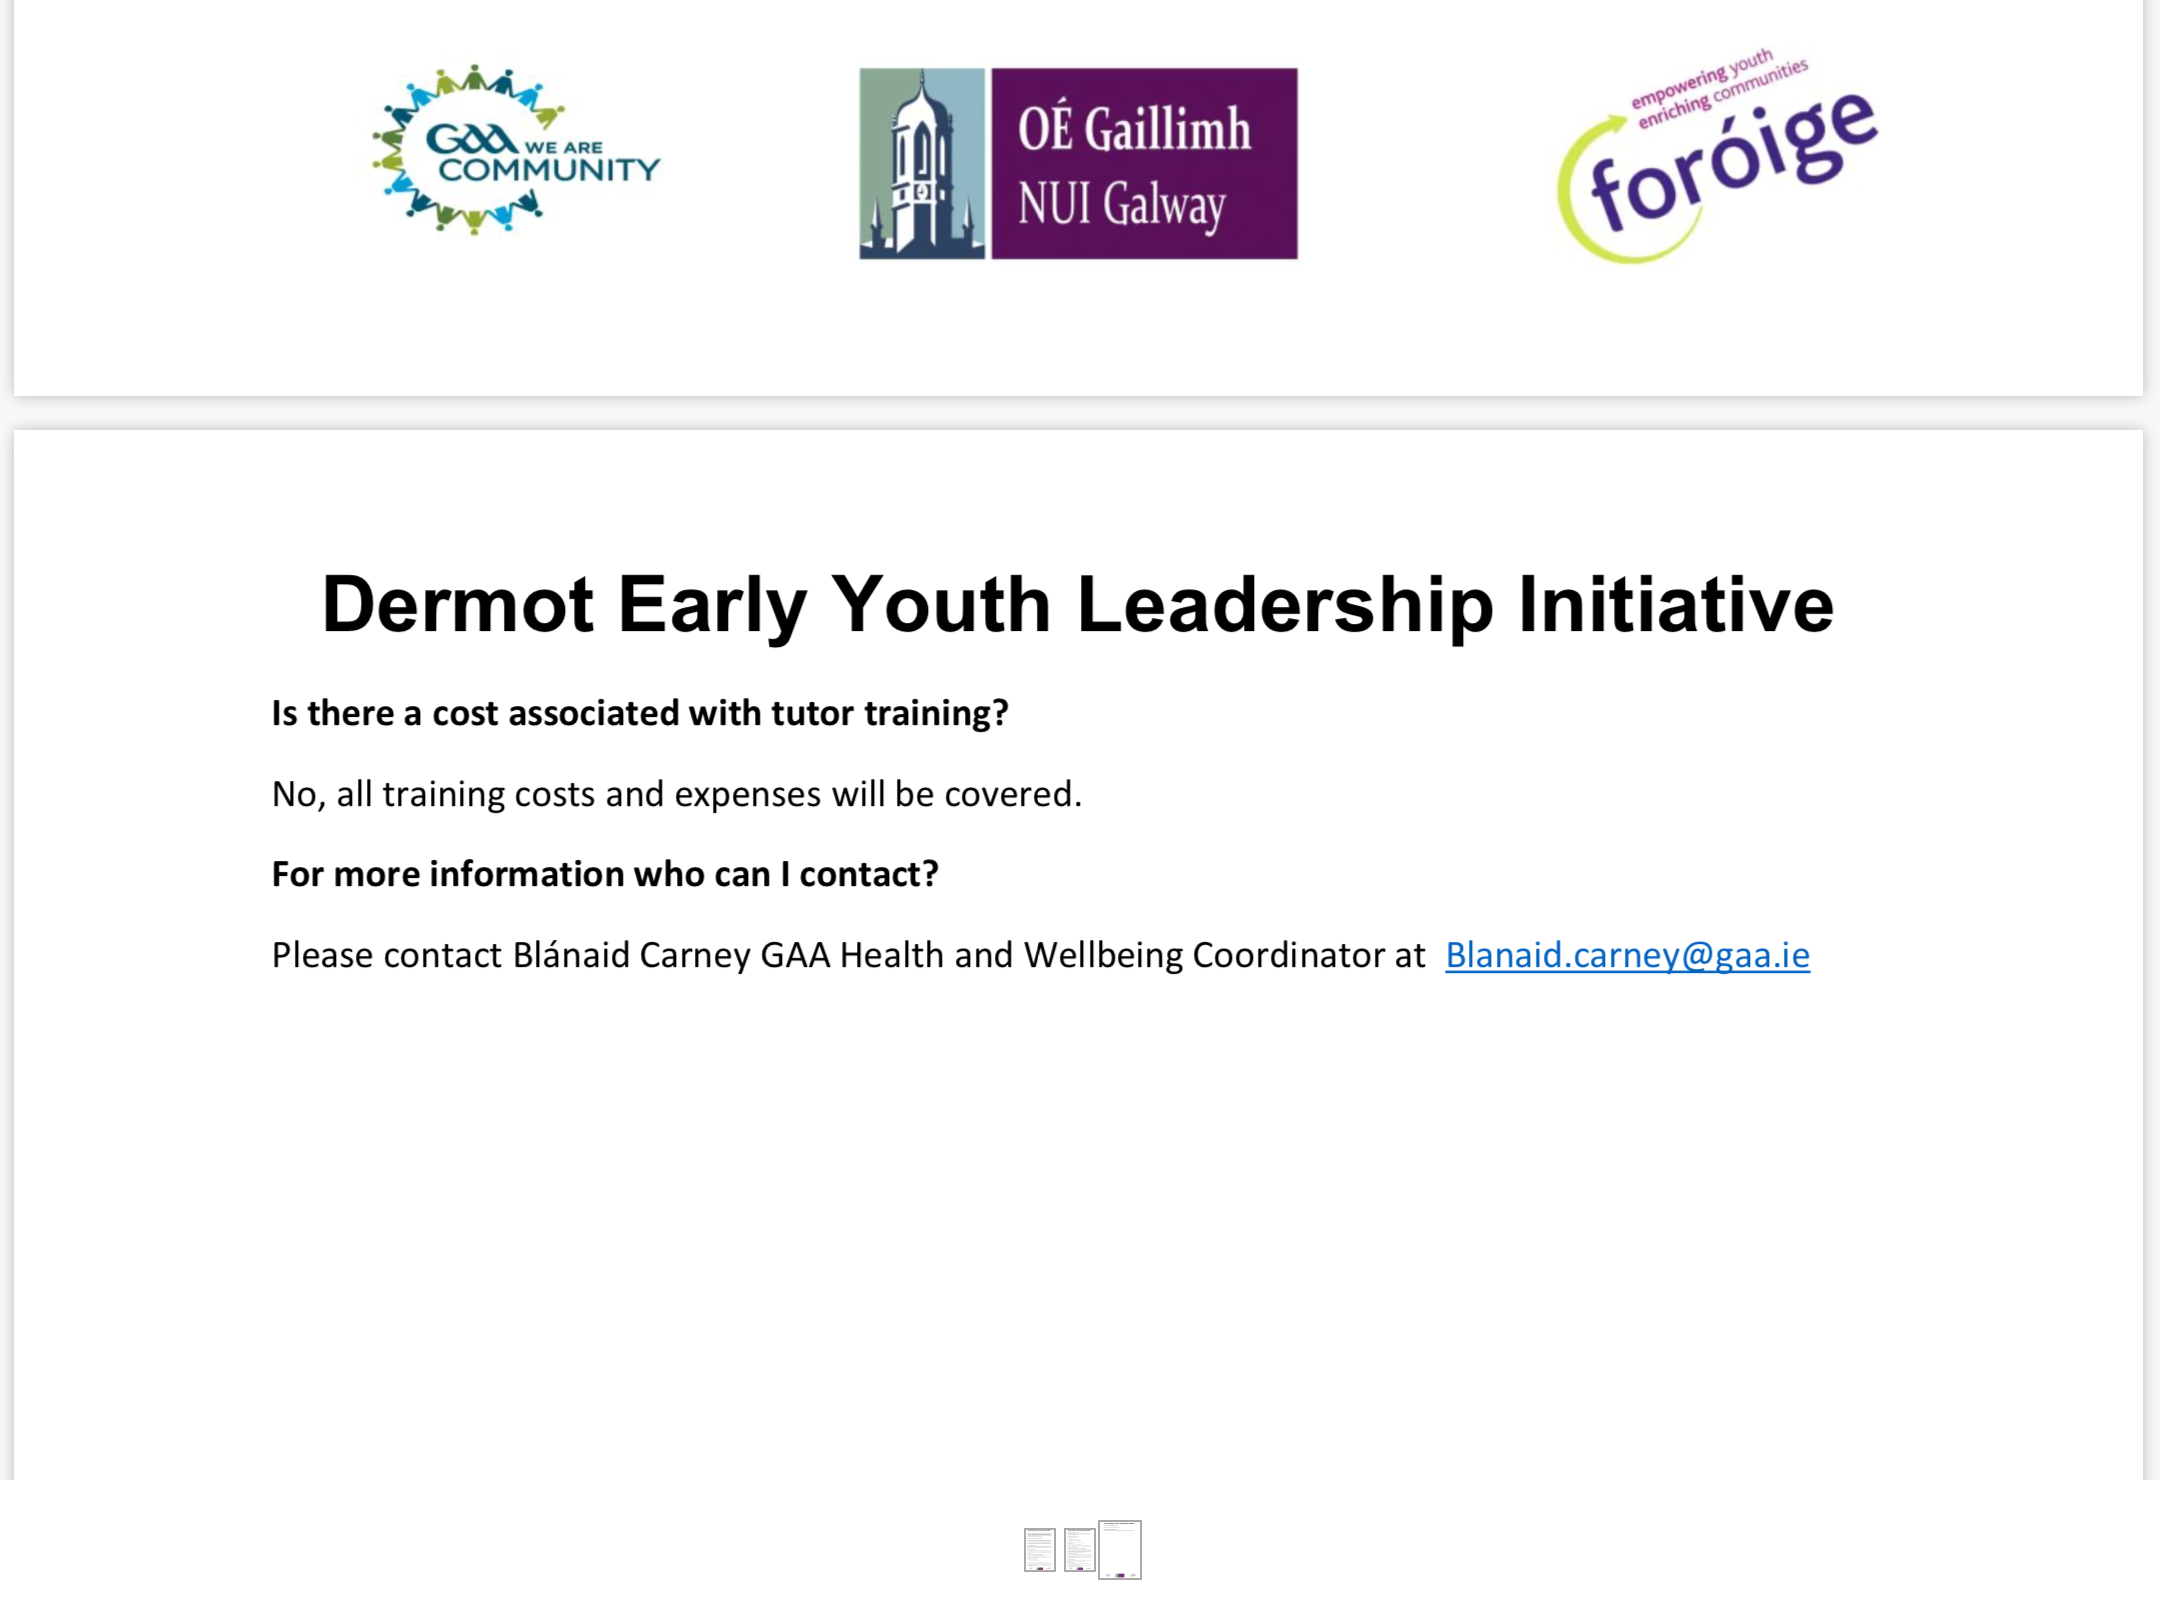 Dermot Earley Youth Leadership Initiative